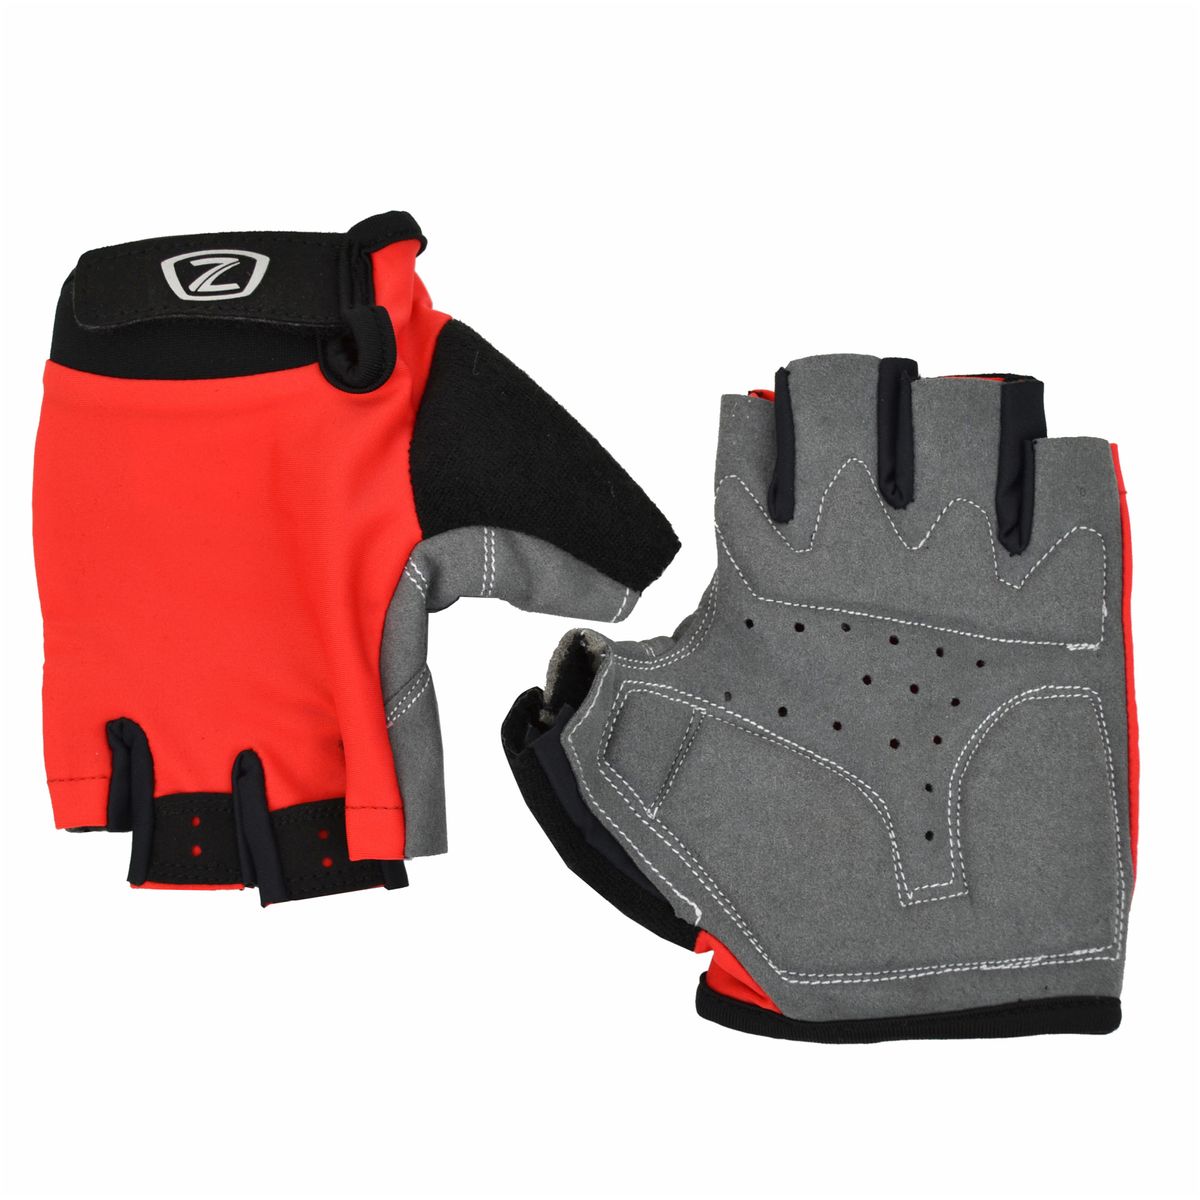 [RDY] [送料無料] Zefal フィンガーレス コンフォート バイクグローブ (L-XL) [楽天海外通販] | Zefal Fingerless Comfort Bike Gloves (L-XL)